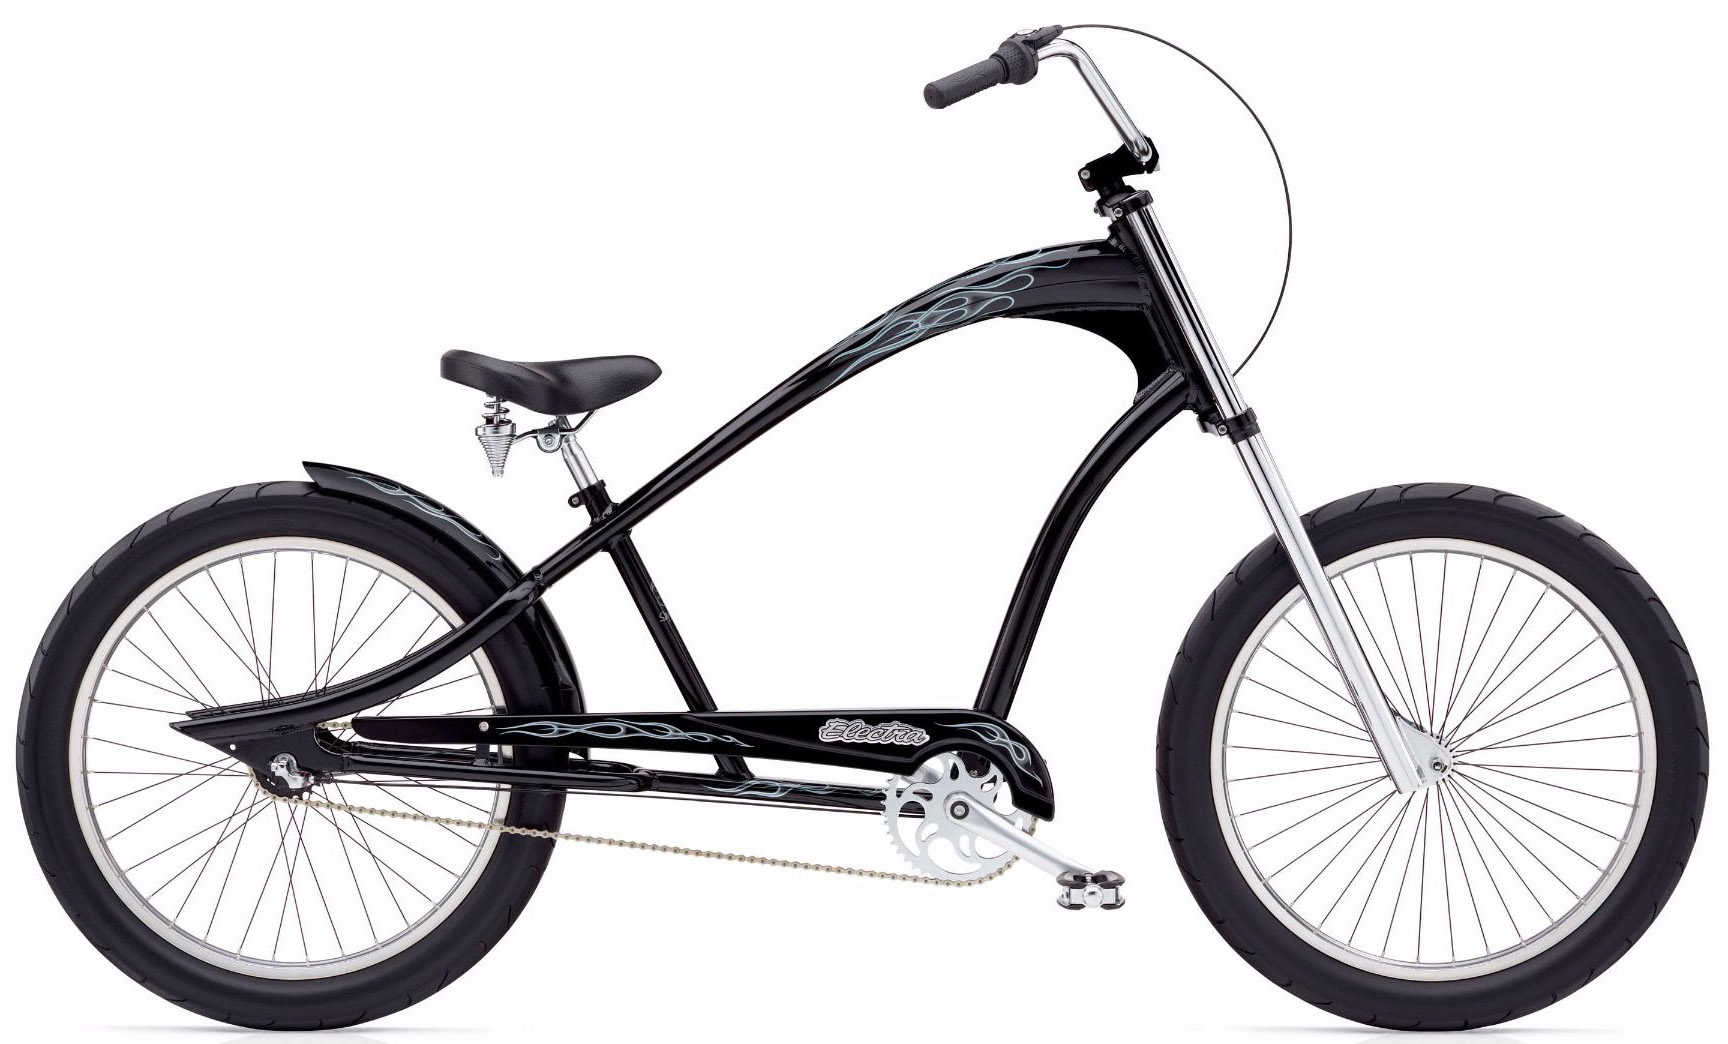  Велосипед Electra Ghostrider 3i 2020